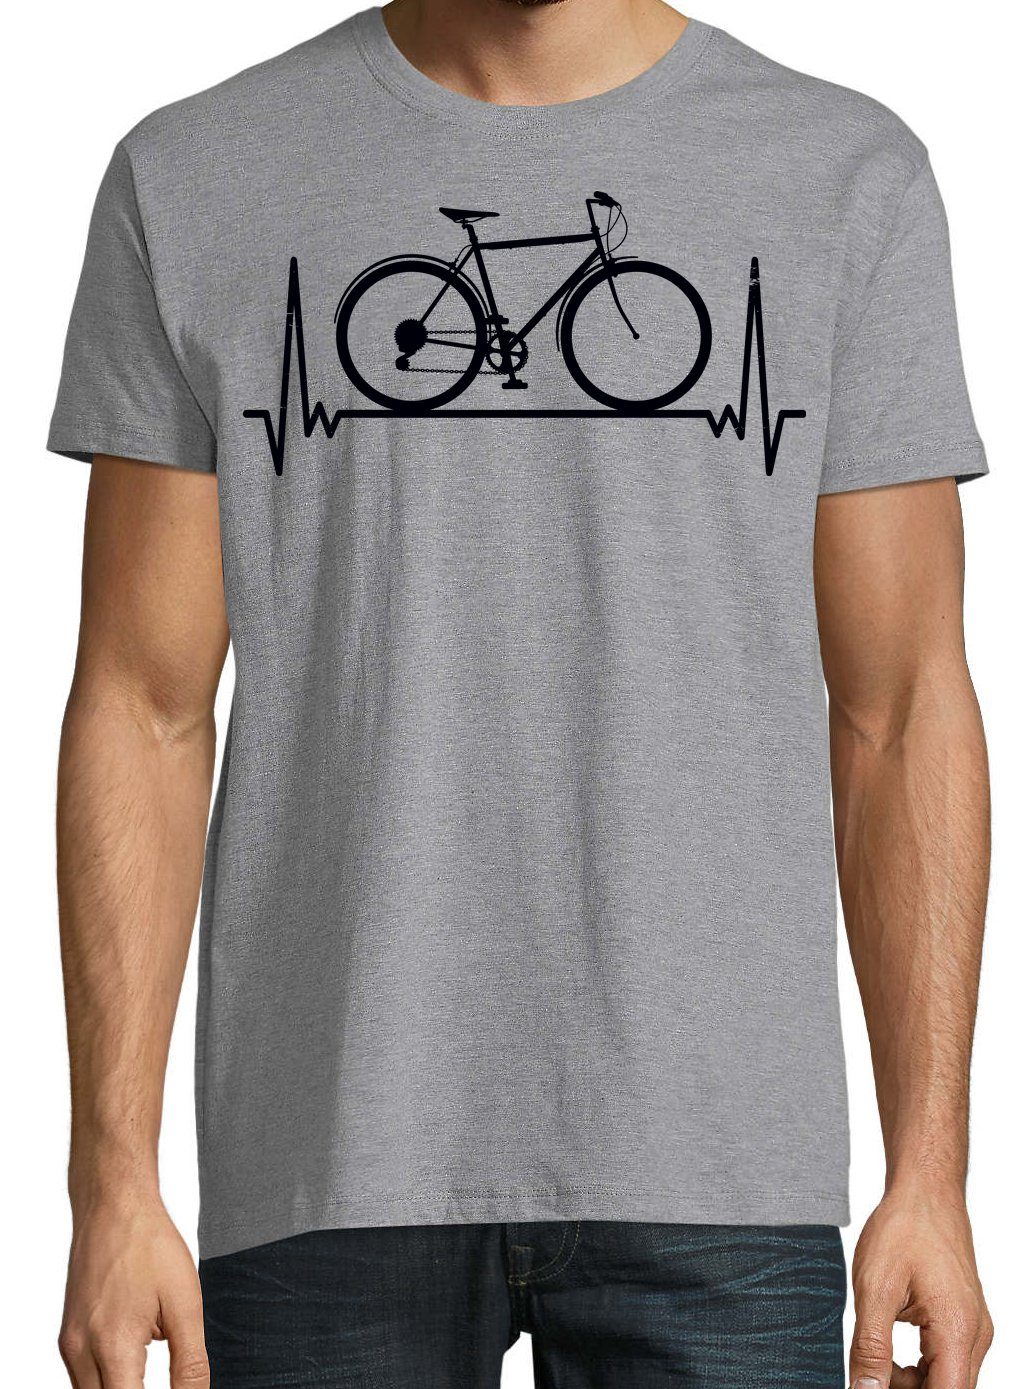 Herren Fahrrad Heartbeat T-Shirt Frontprint Fahrrad mit Designz Grau Youth Shirt lustigem